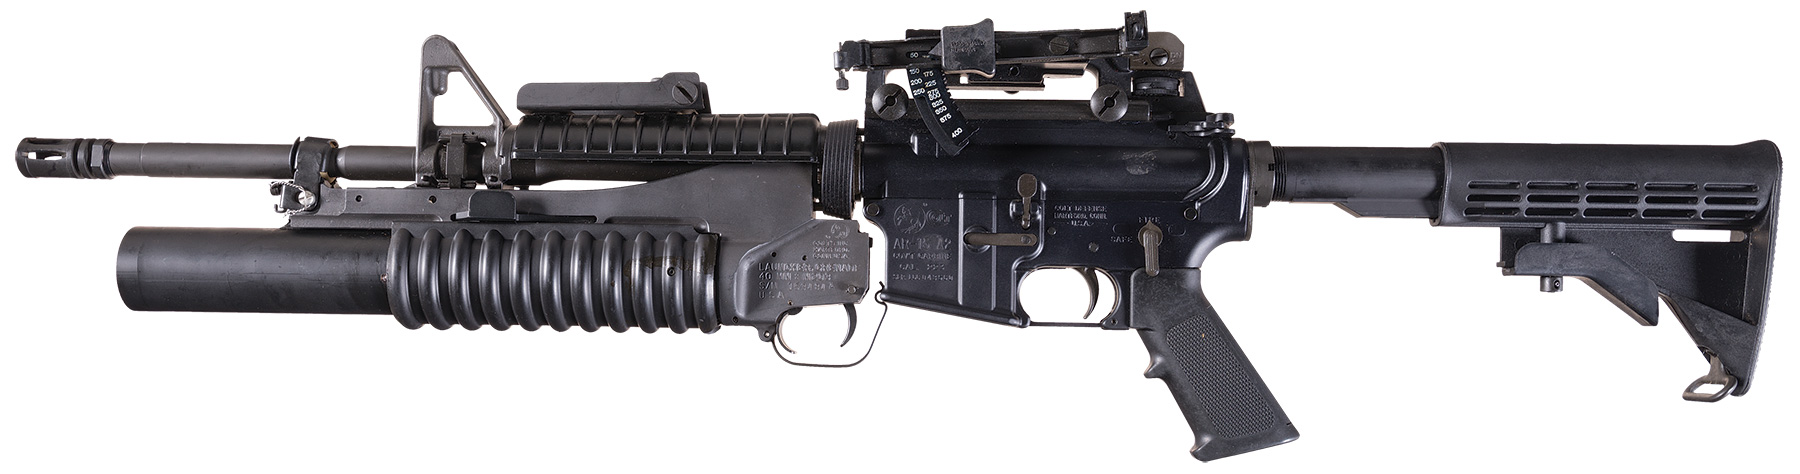 Colt AR-15A2 Carbine /Colt M203 40 mm Grenade Launcher Rig.